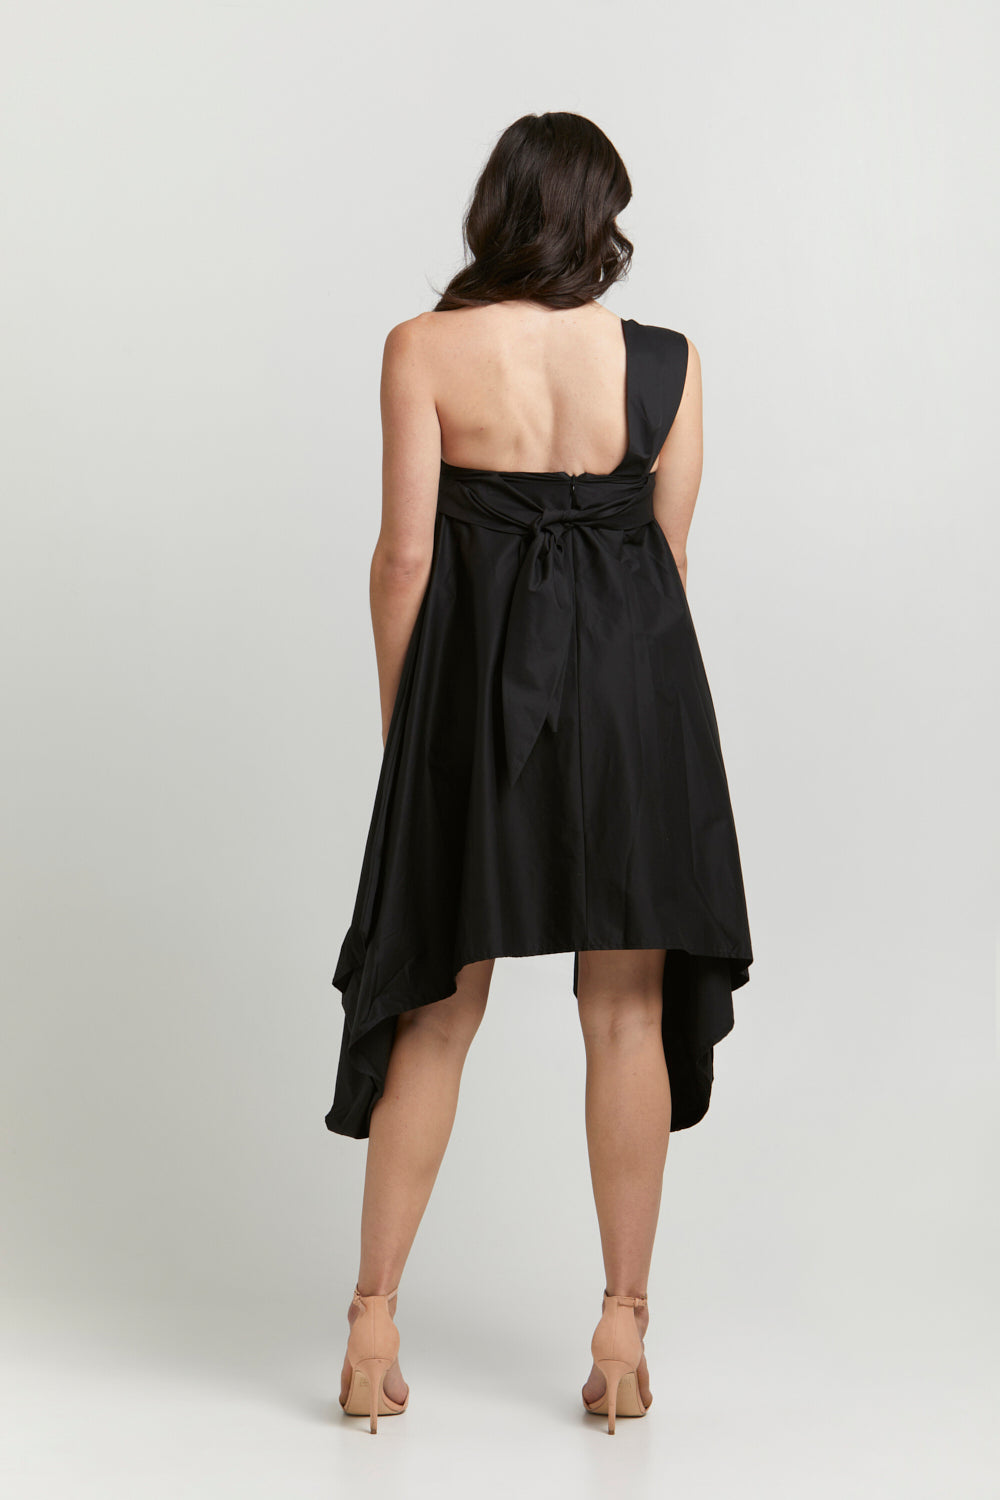 Bravaa DRESSES Adora Black Asymmetric One-Shoulder Dress